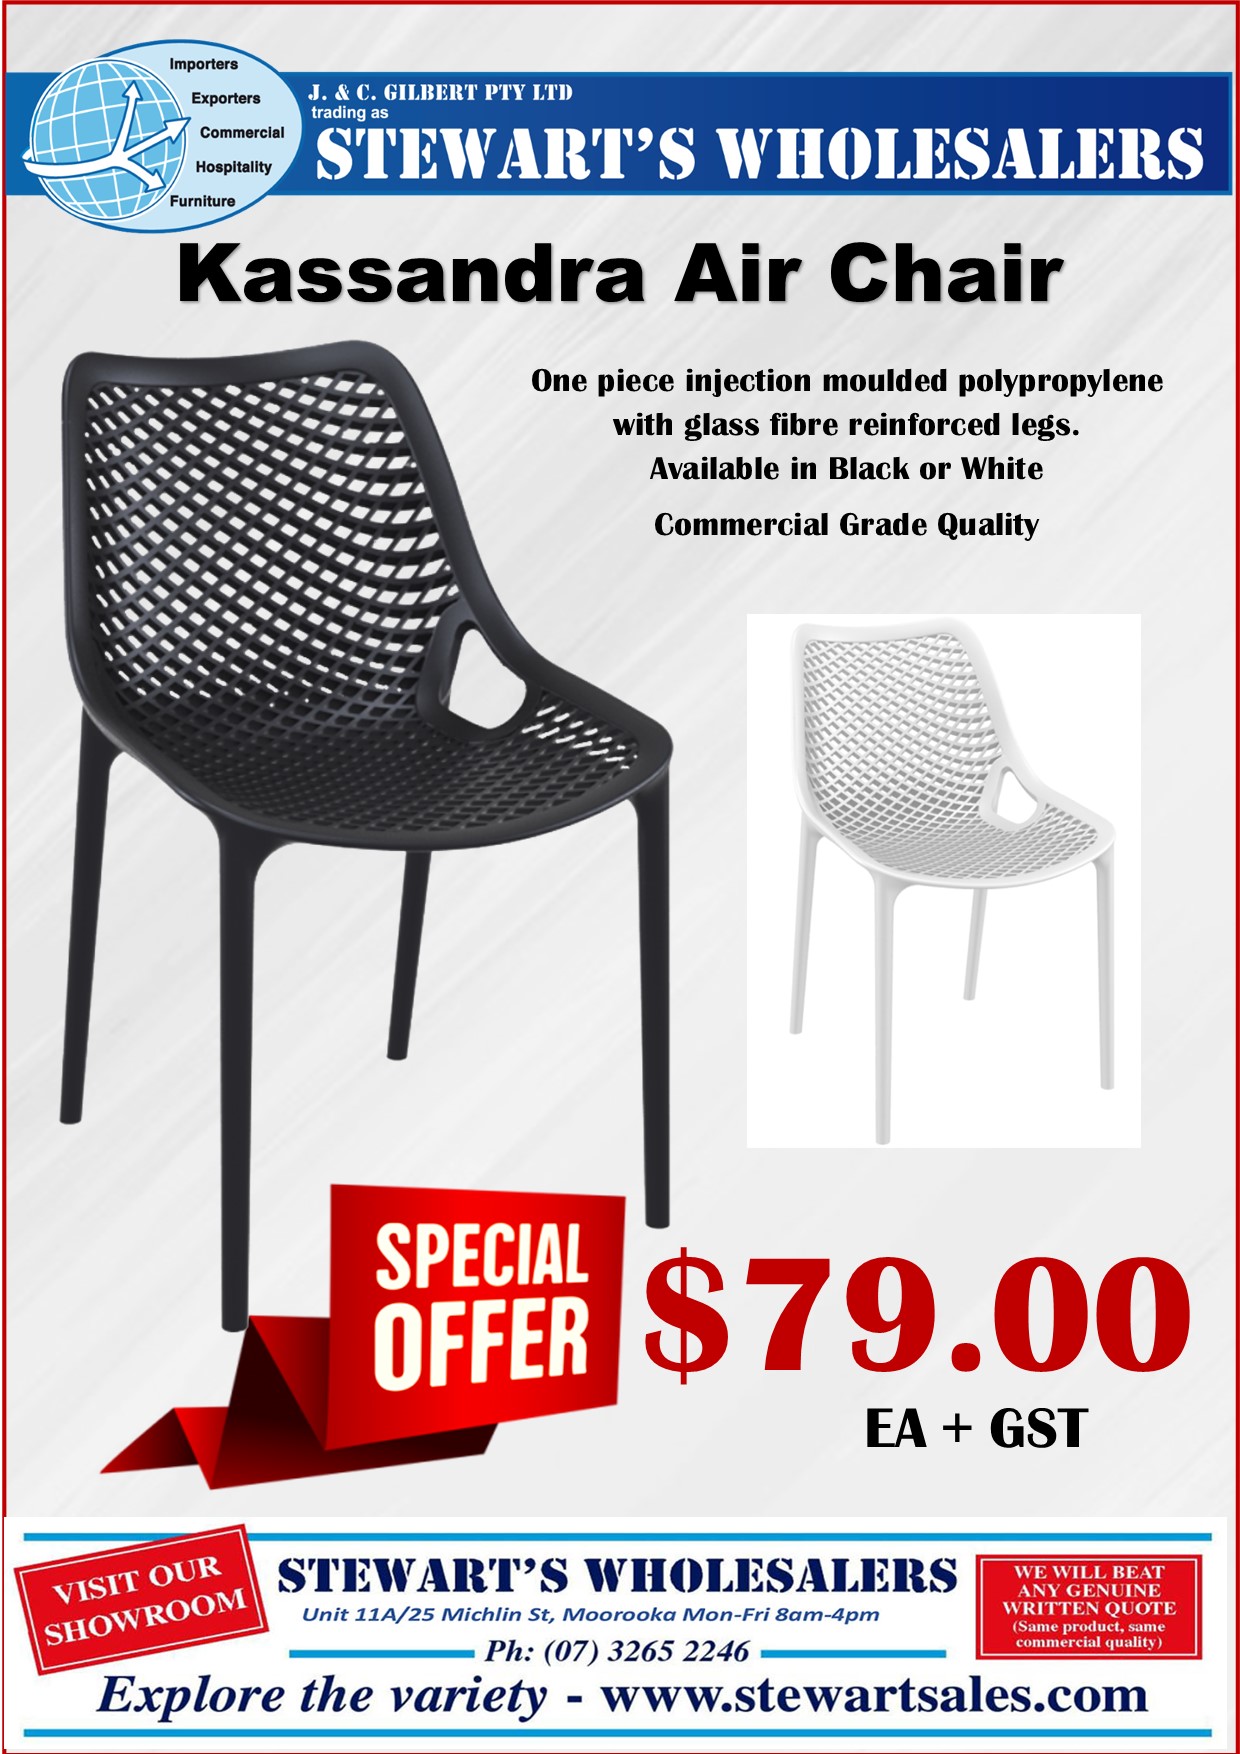 Kassandra_Air_Chair_Special.jpg